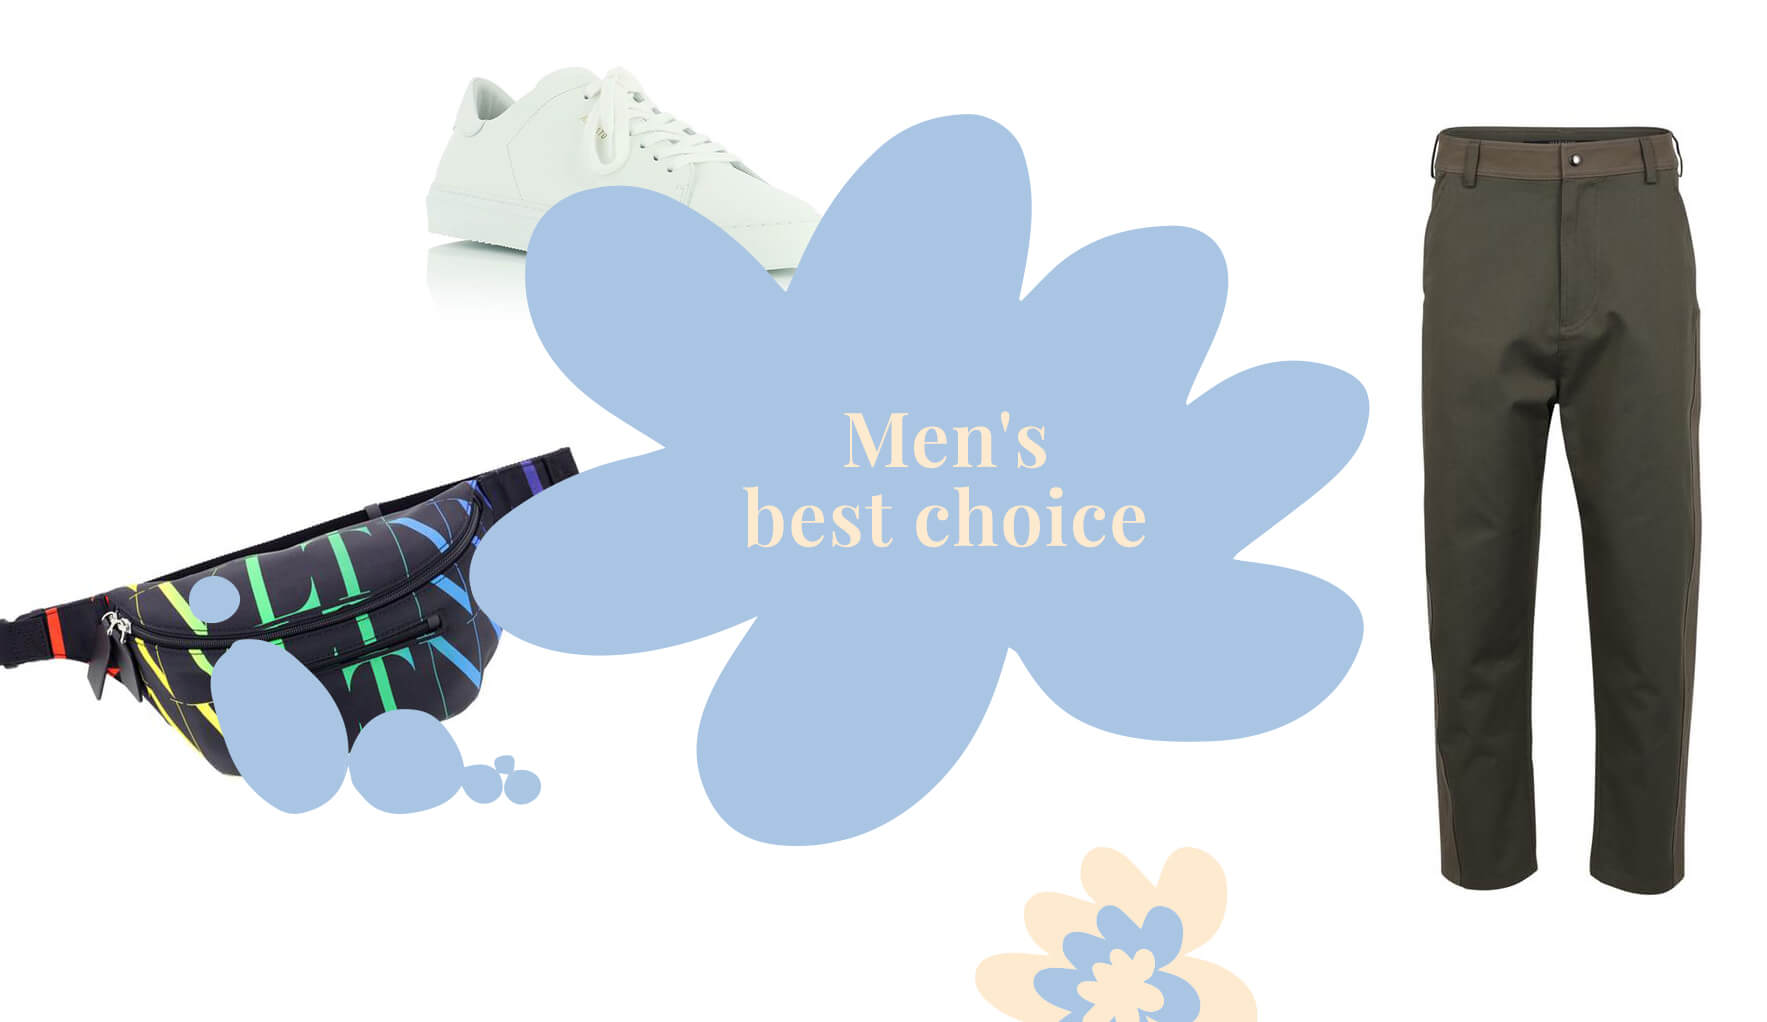 Men's best choice